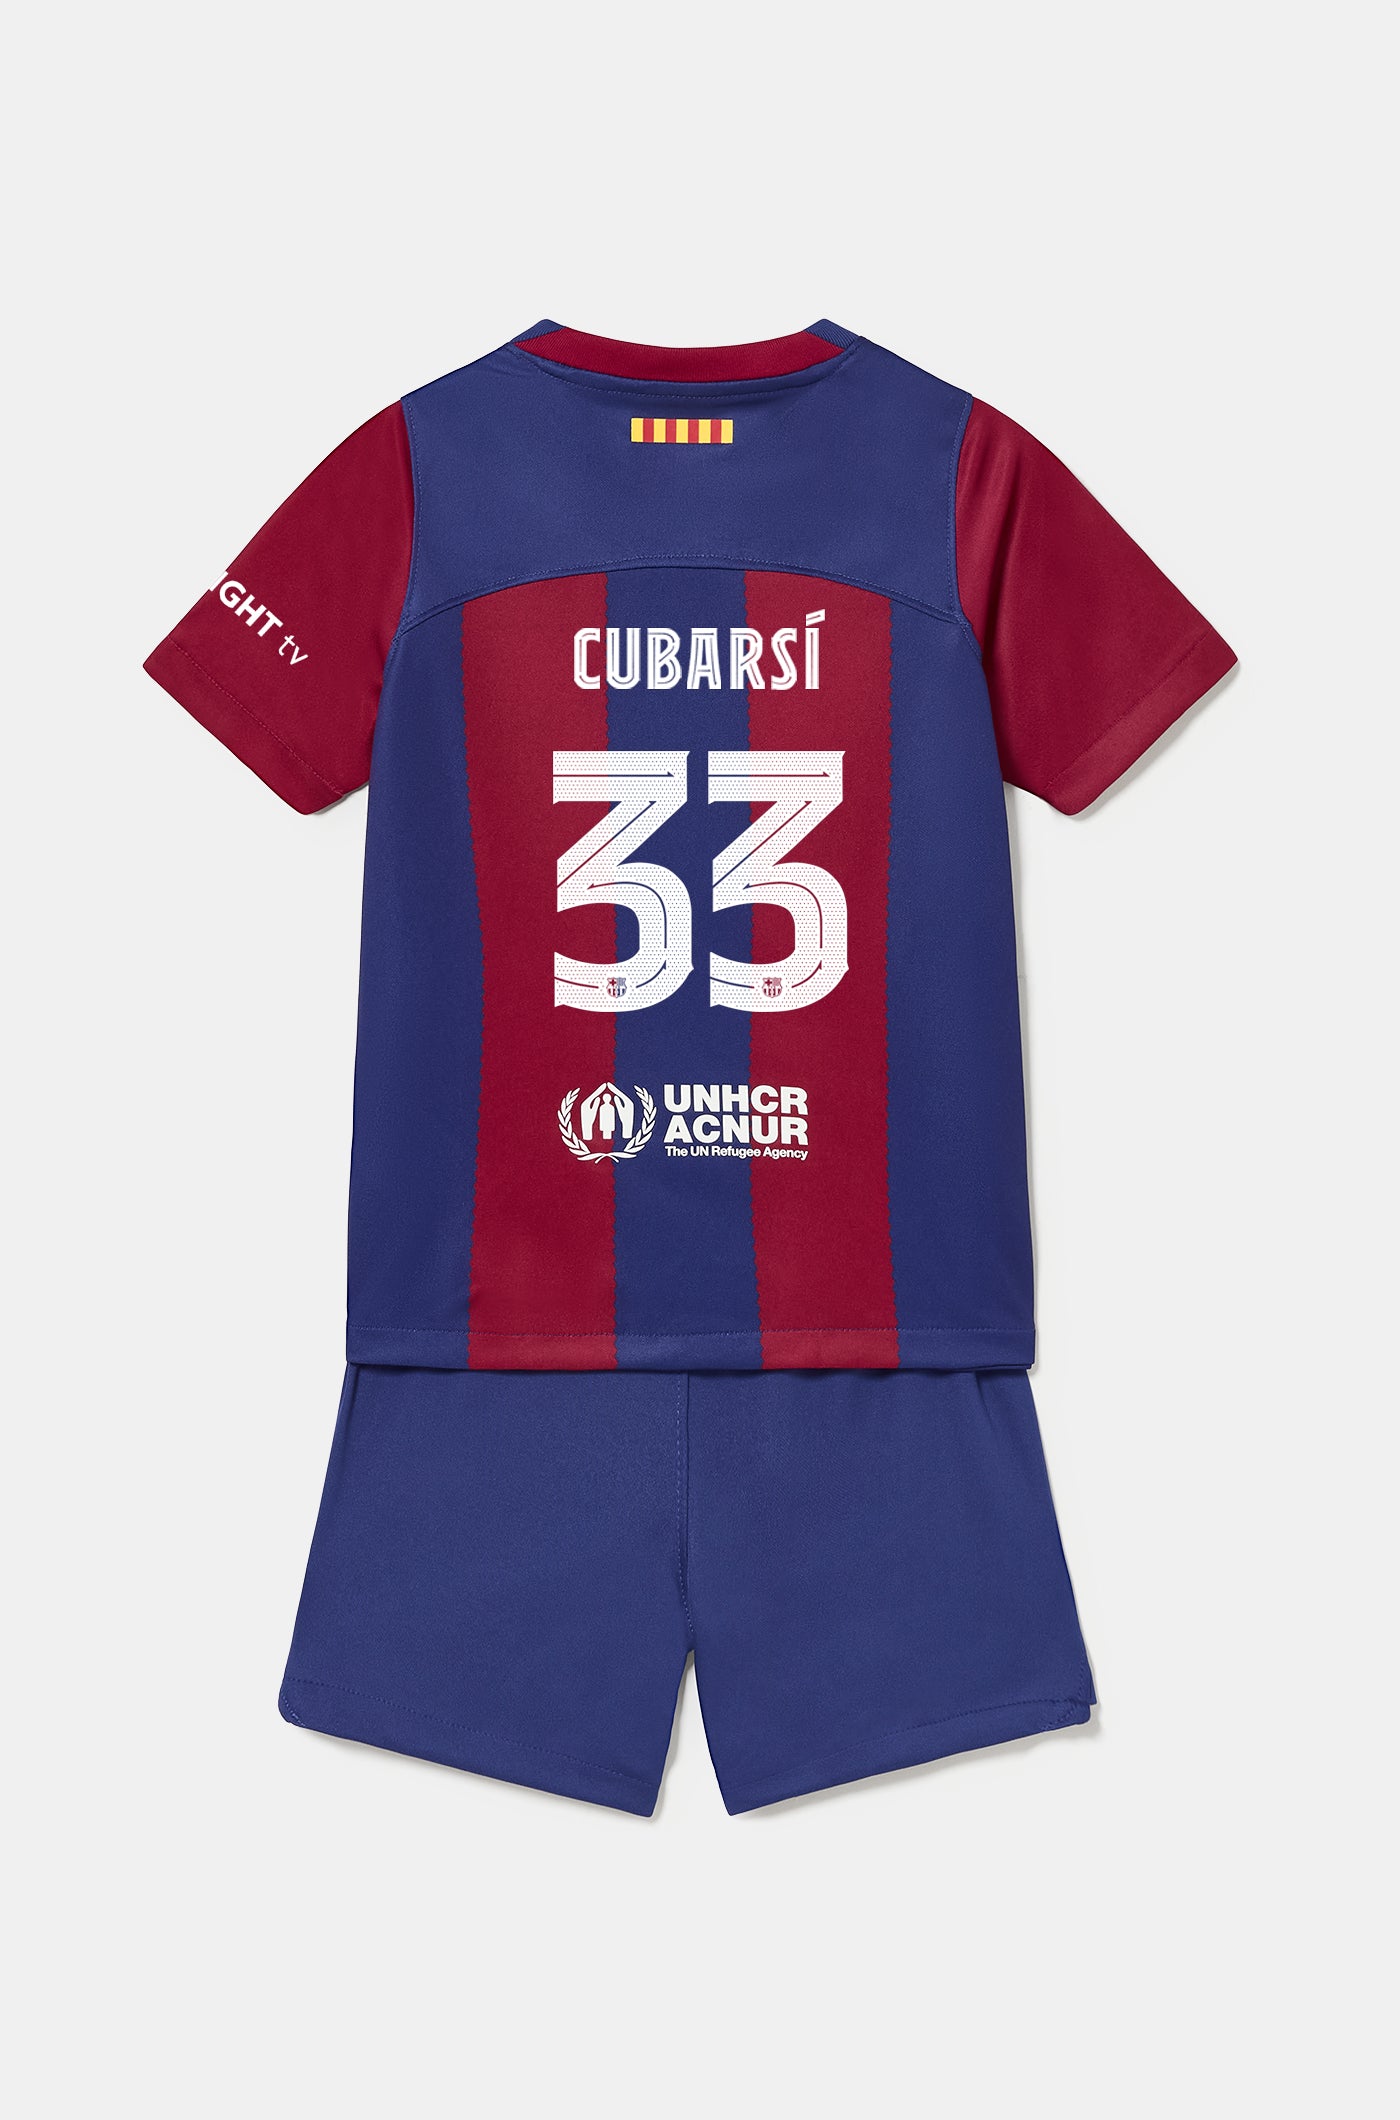 FC Barcelona home Kit 23/24 - Younger Kids  - CUBARSÍ